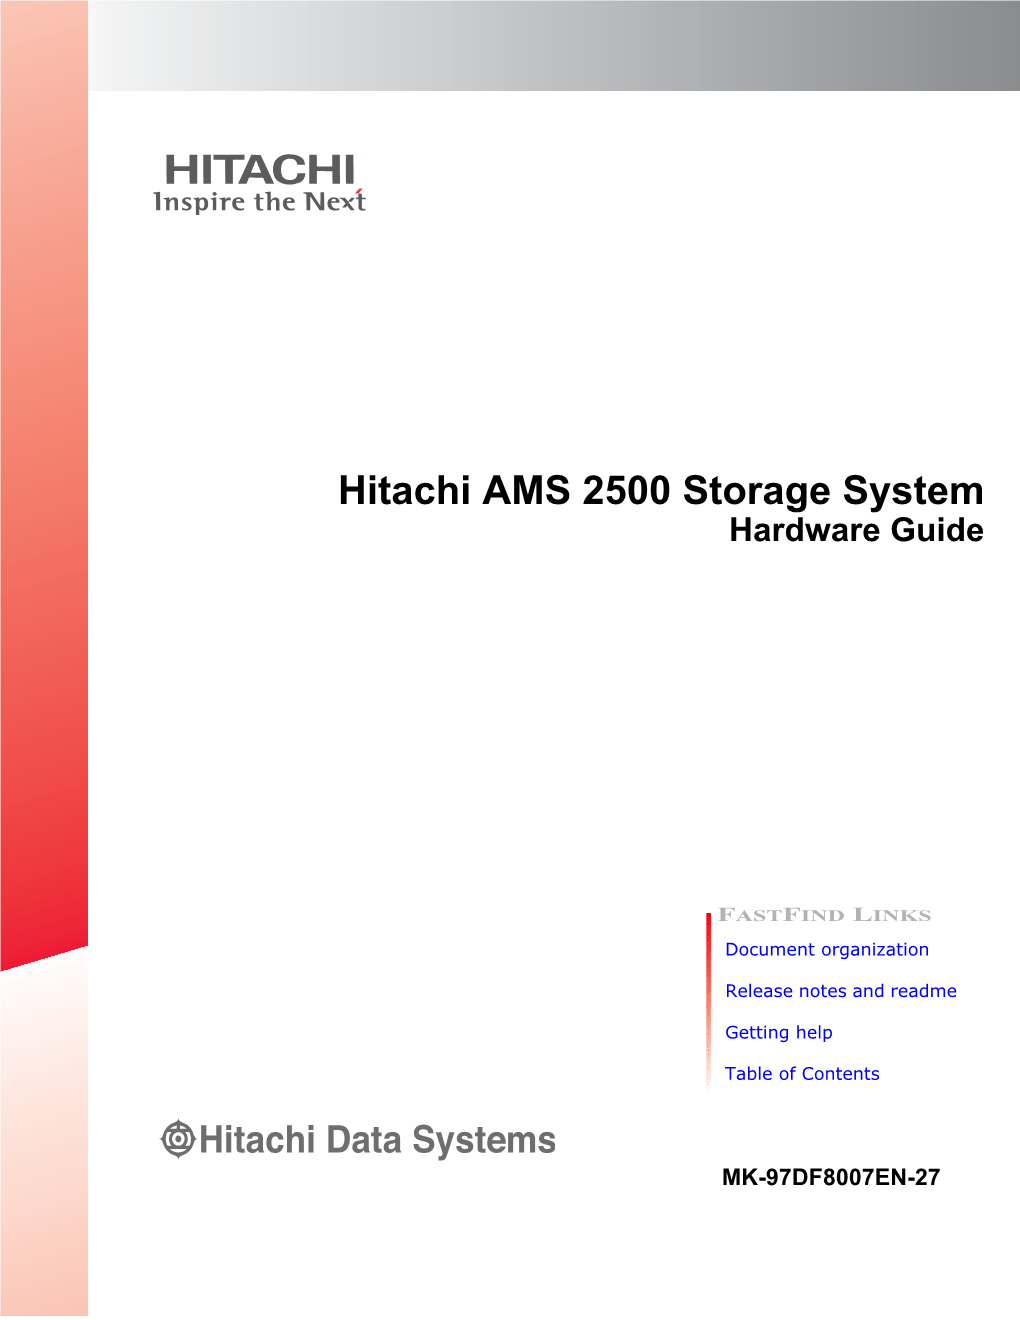 Hitachi AMS 2500 Storage System User's Guide